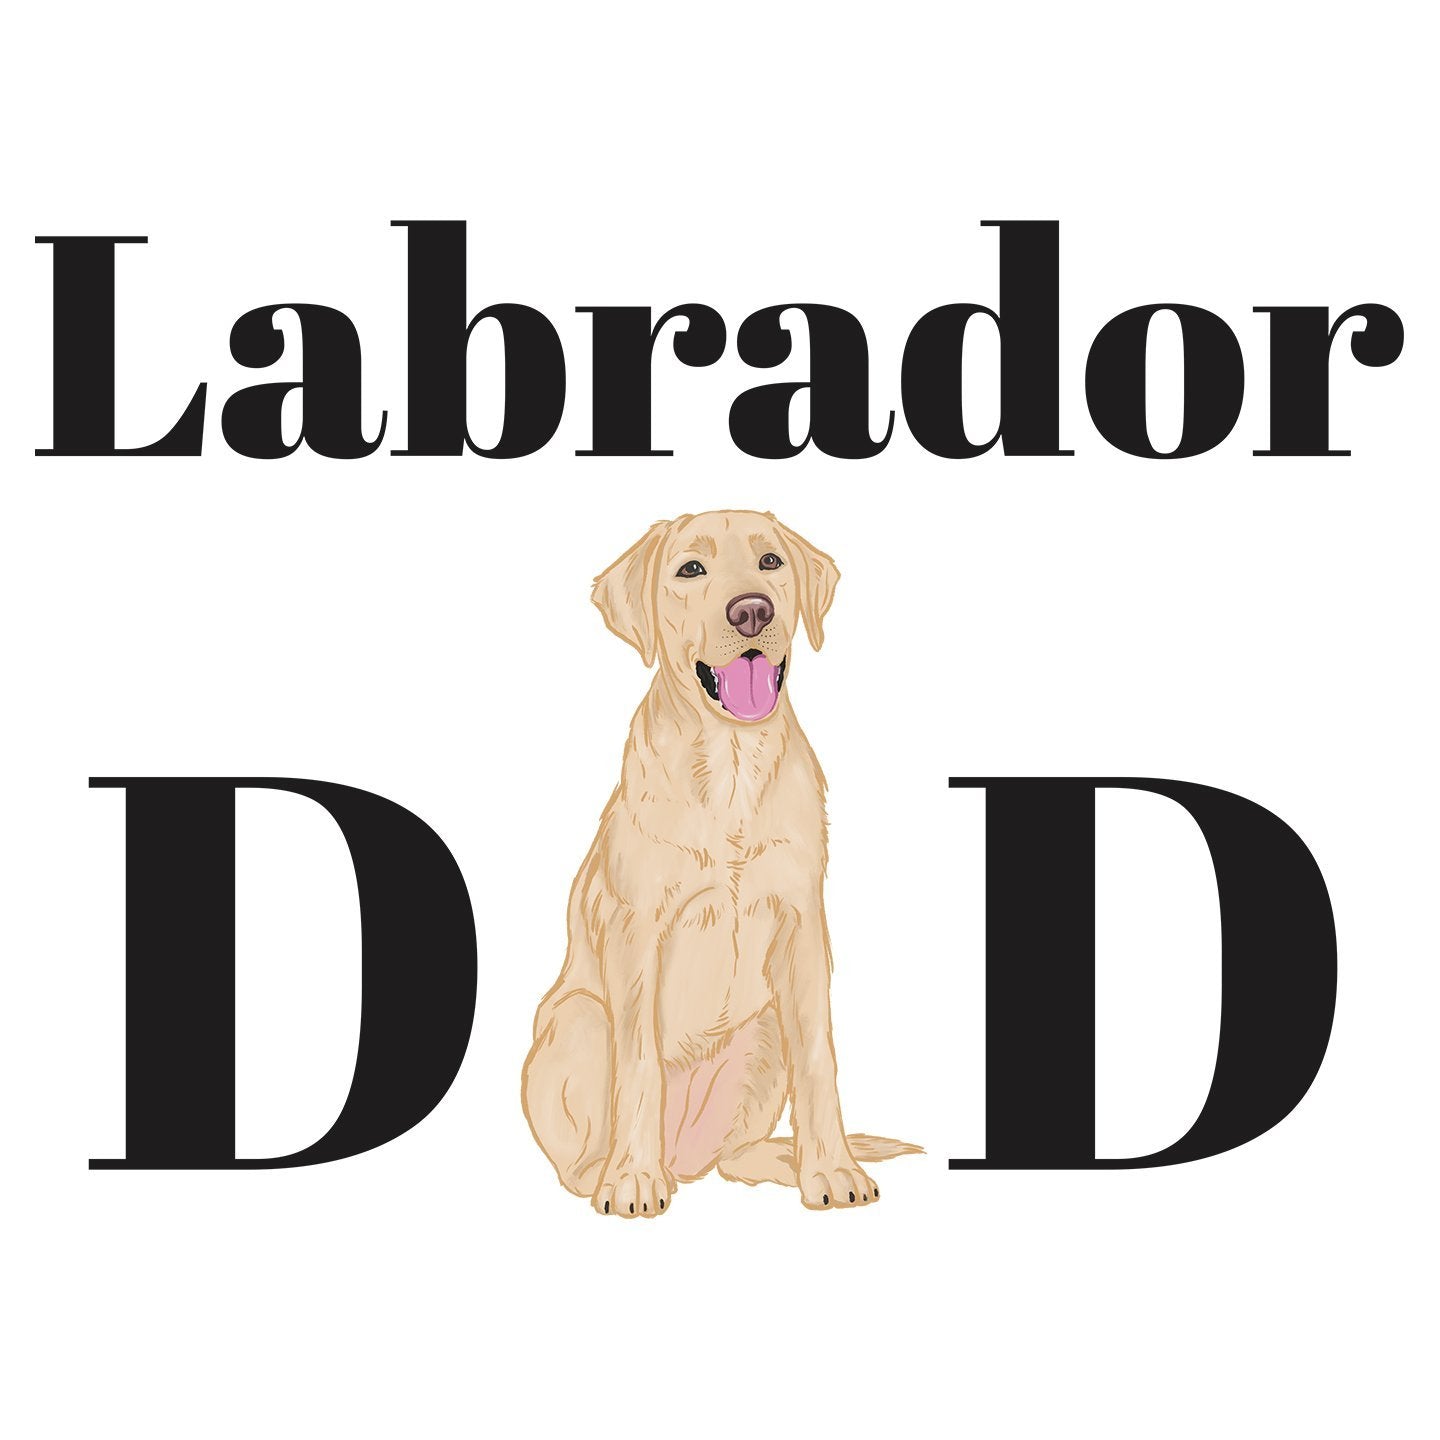 Yellow Labrador Dad Illustration - Adult Unisex Hoodie Sweatshirt